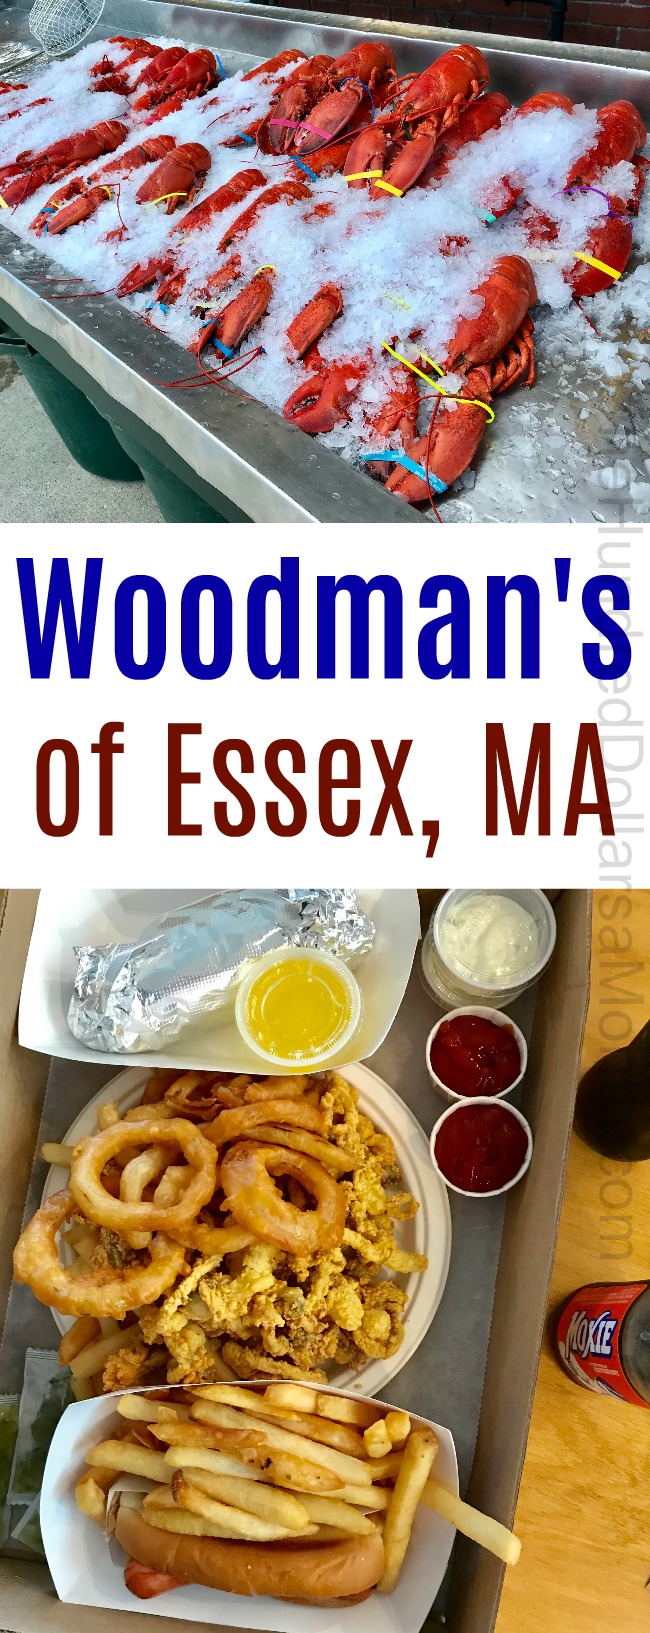 Woodman’s of Essex